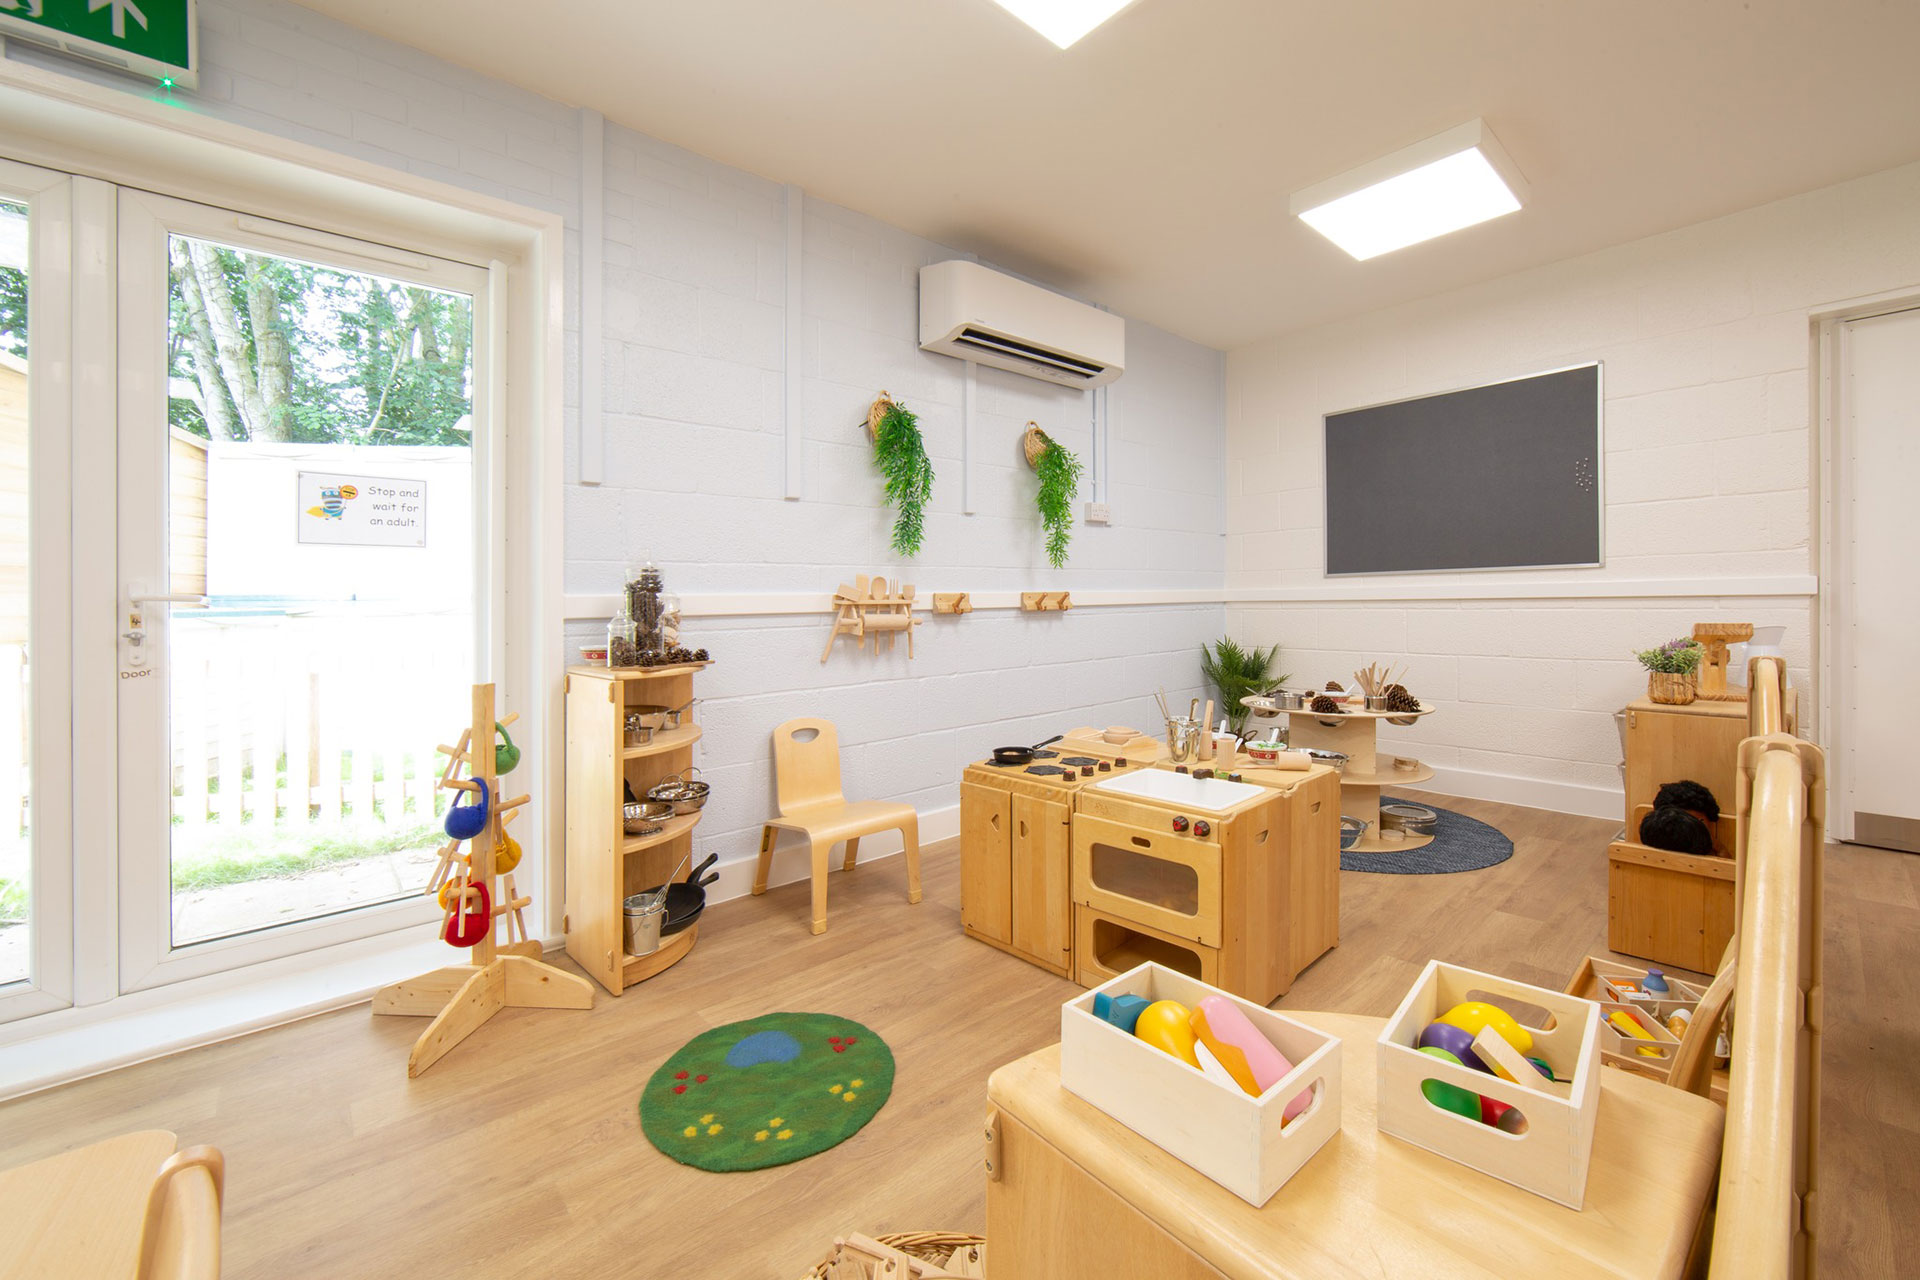 Open now Witney Day Nursery and Preschool